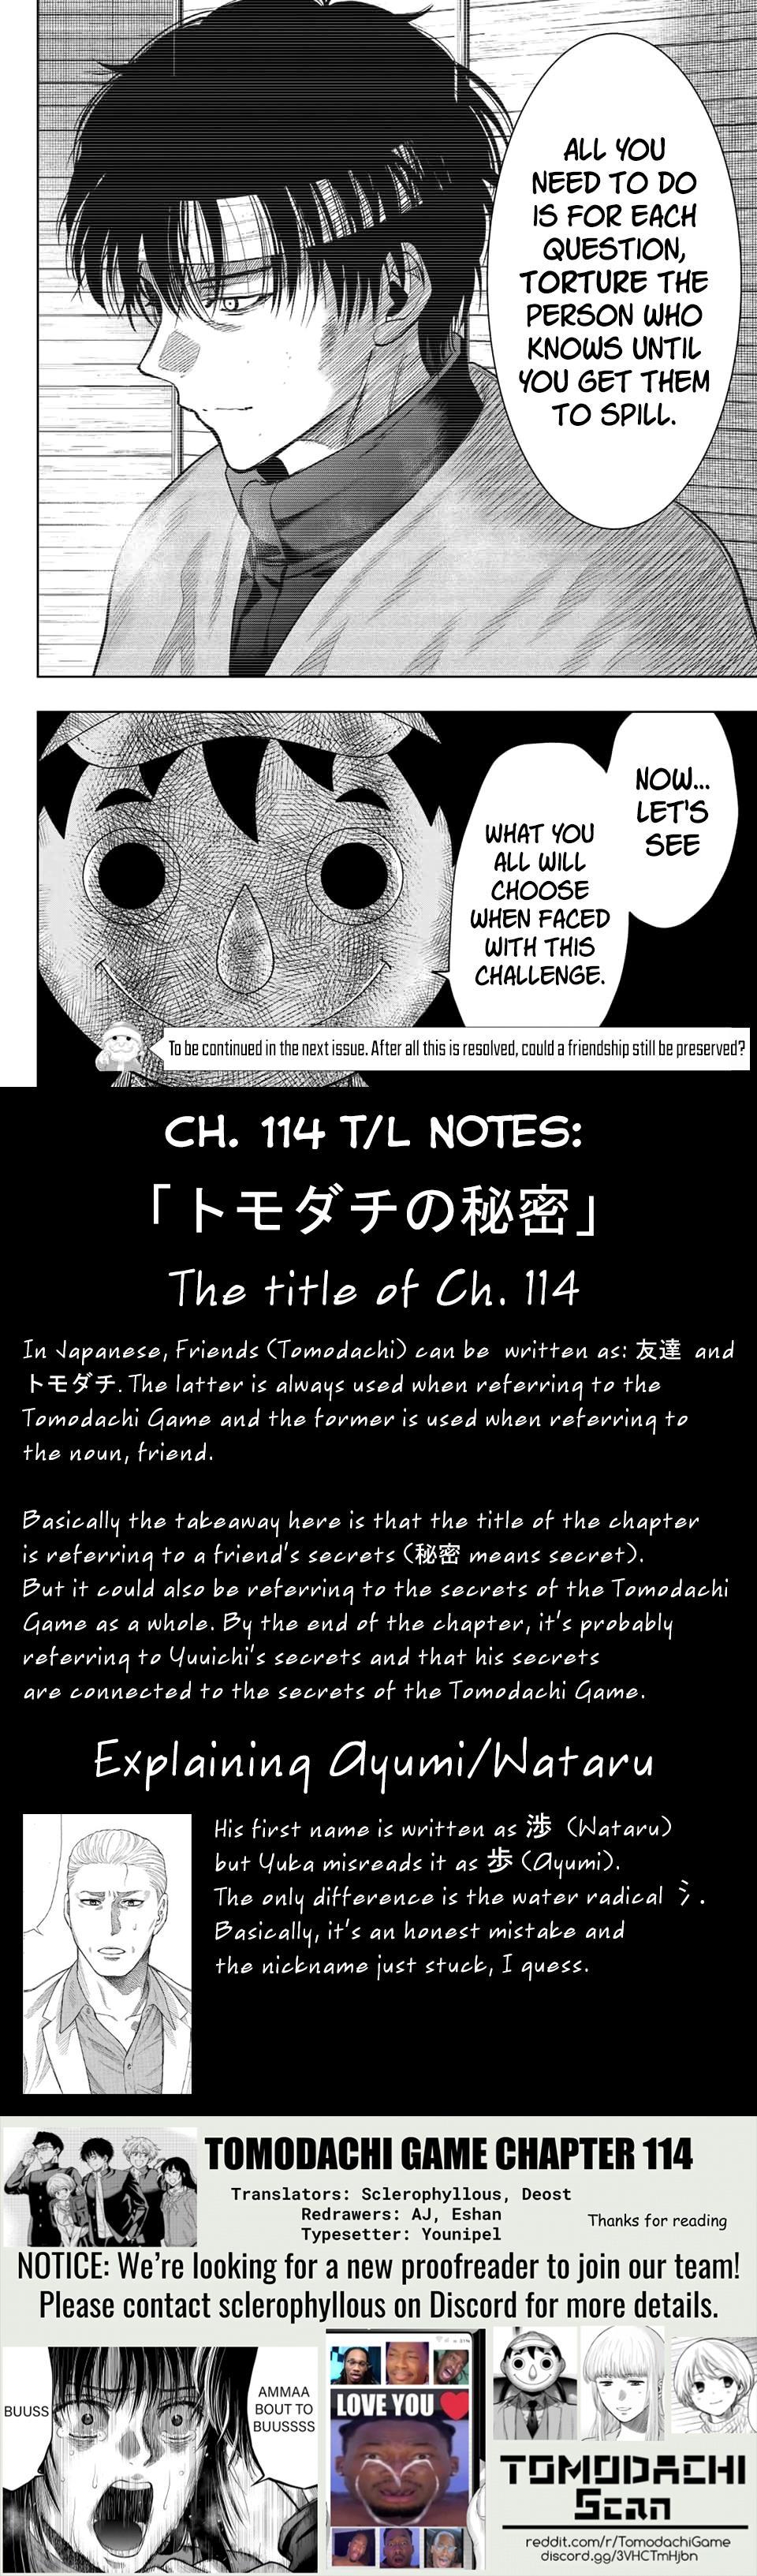 Tomodachi Game Ch.117 Page 31 - Mangago